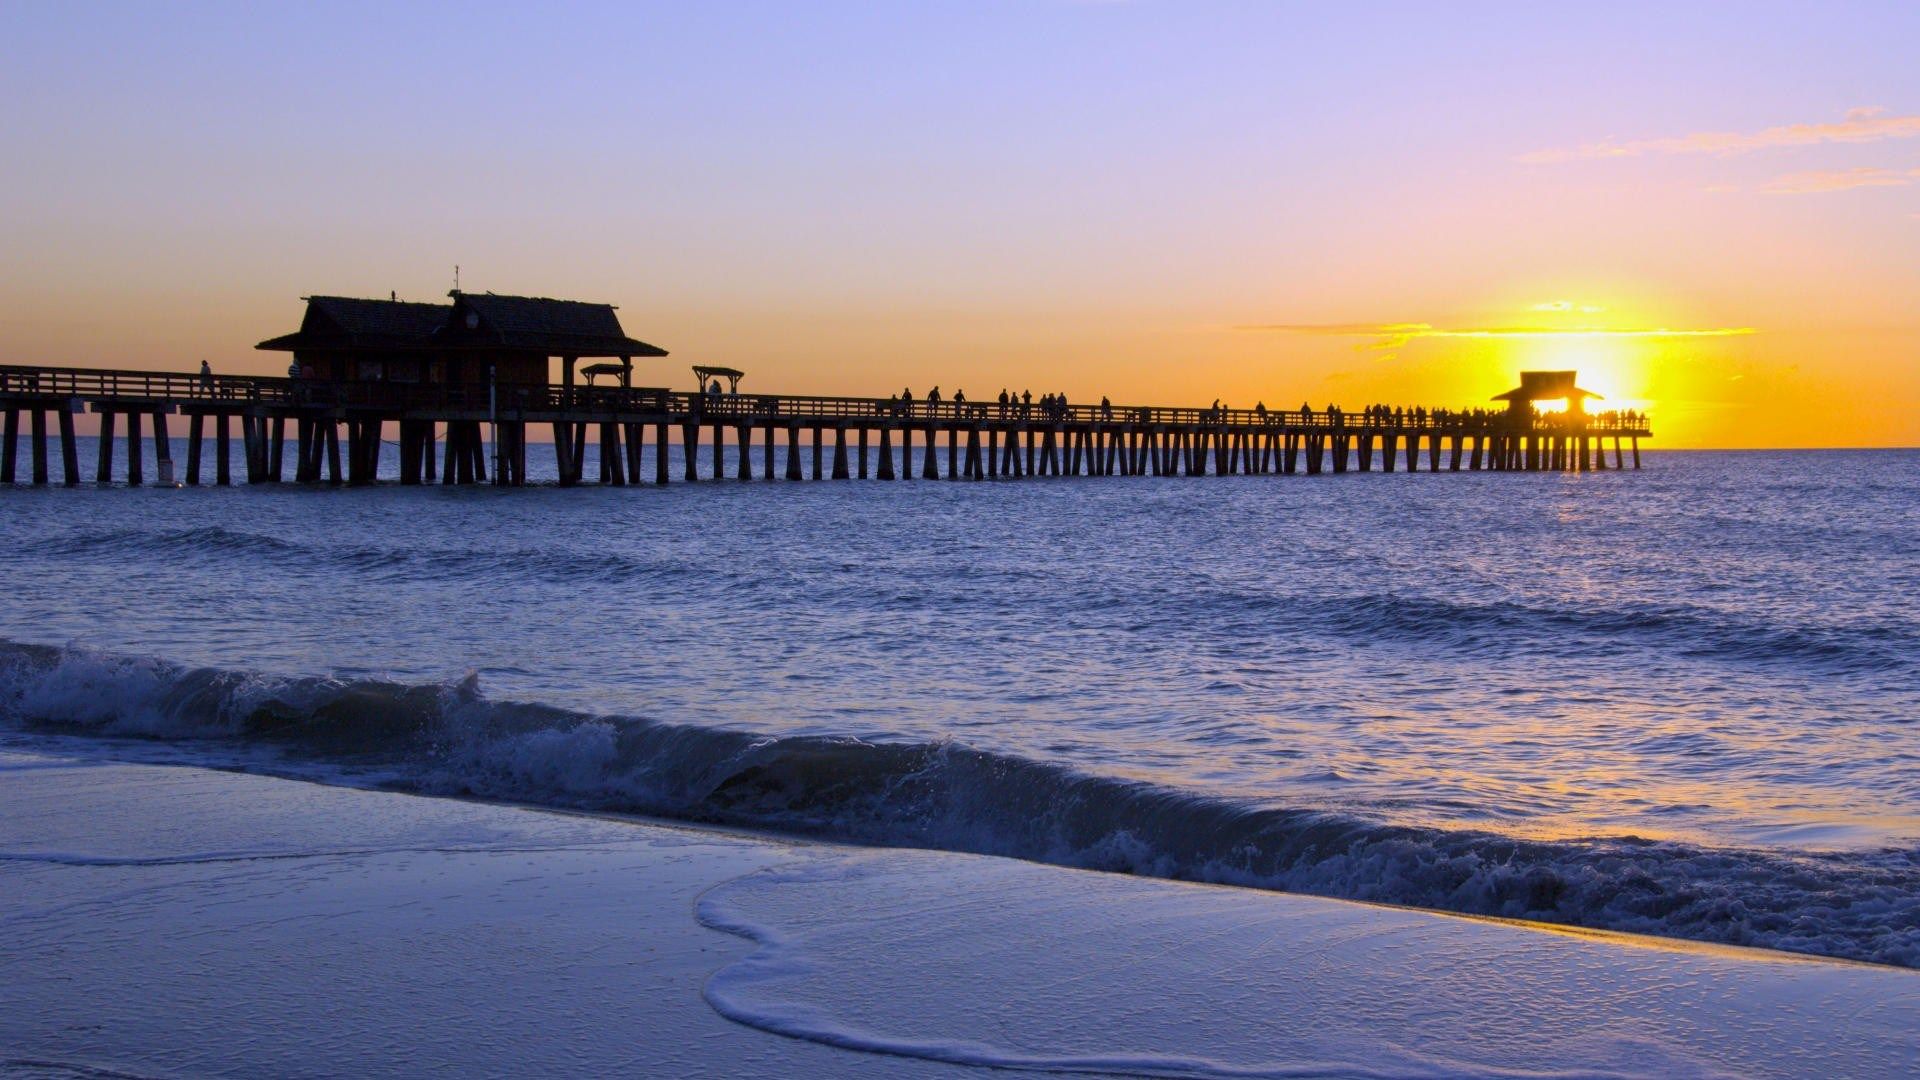 free desktop wallpaper downloads pier. Naples beach, Florida beaches, Florida resorts